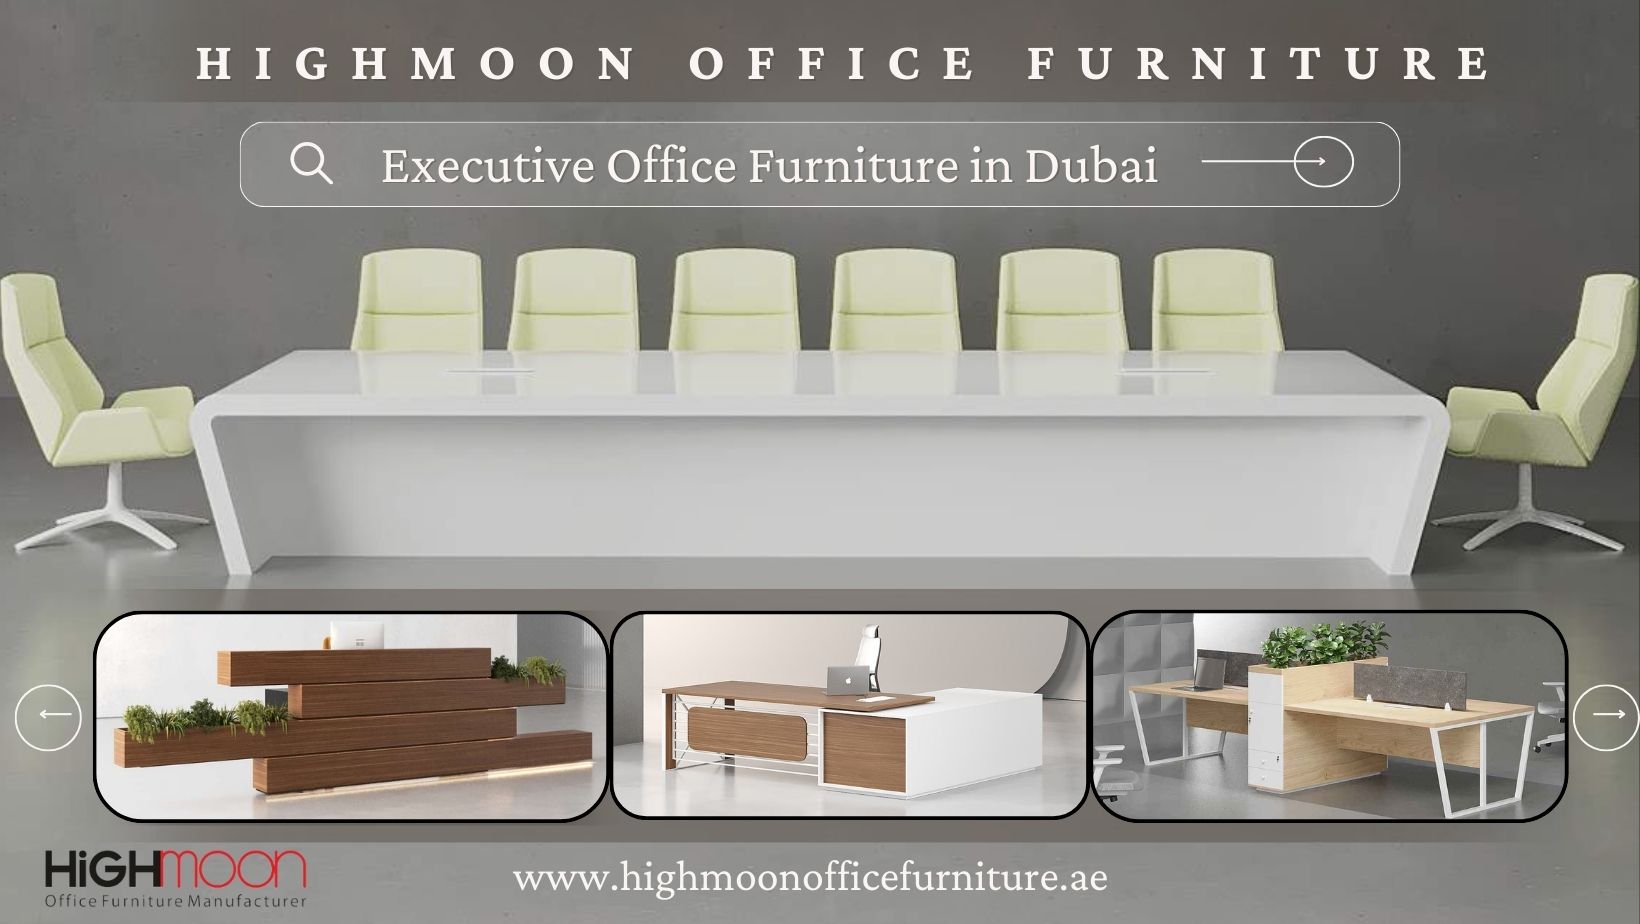 Executive Office Furniture in Dubai HIGHMOON OFFICE FURNITURE